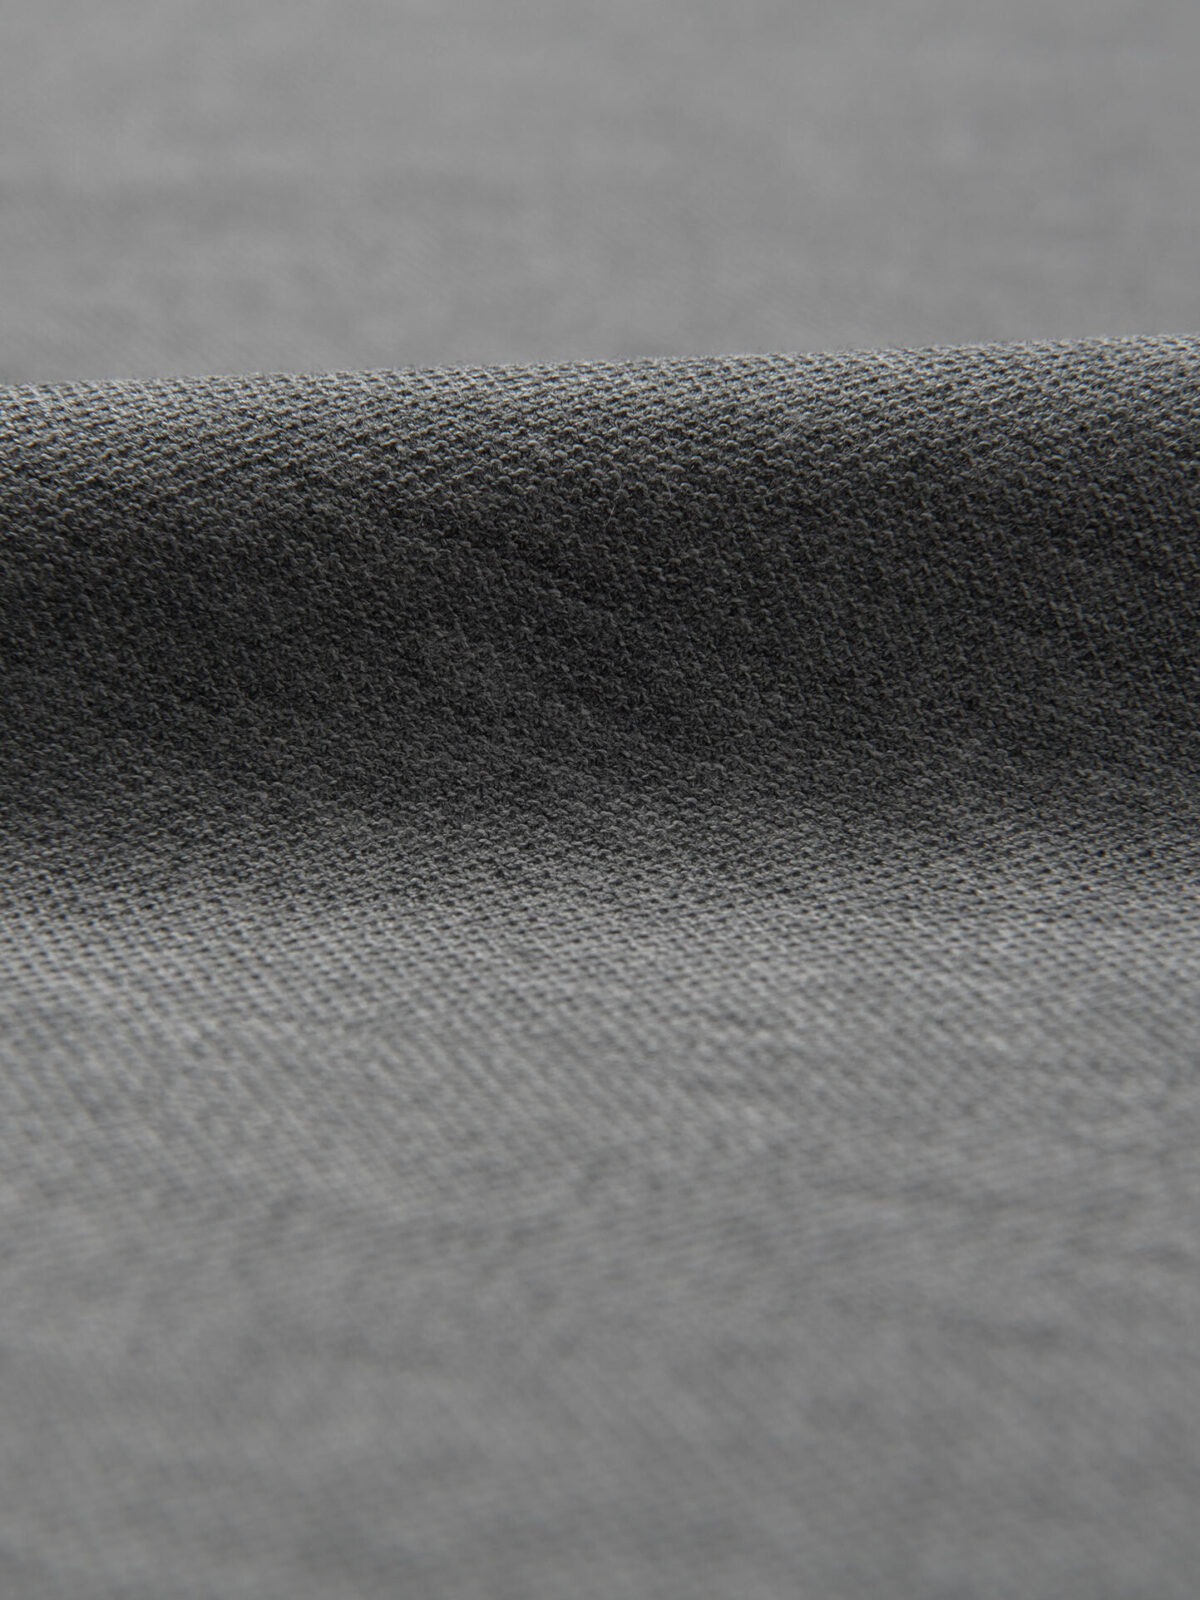 Plain Gray PC Melange Fabrics, Use: Garments at Rs 310/kilogram in